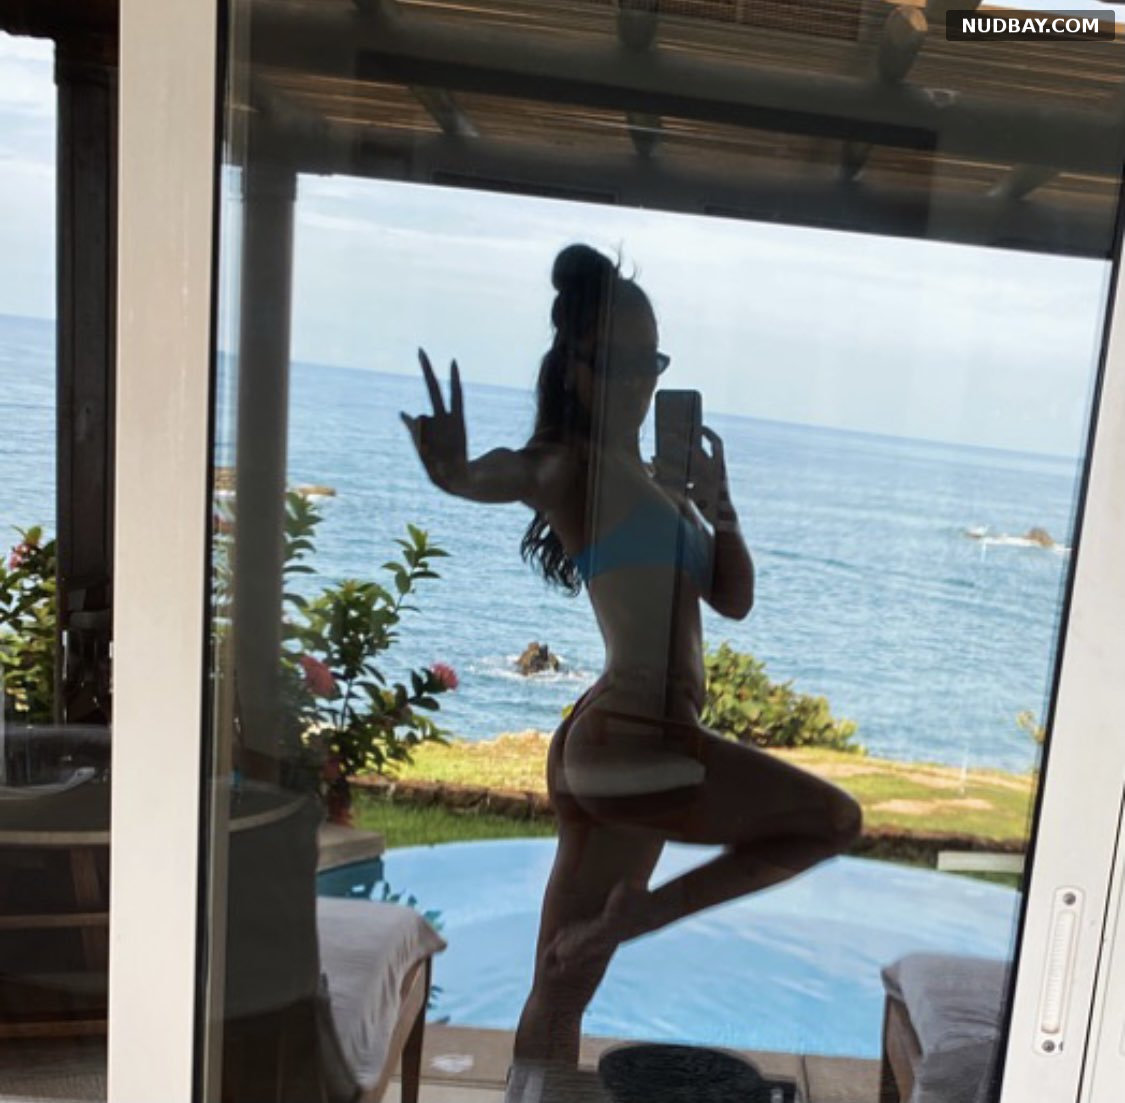 Hailee Steinfeld bare ass selfie Jul 2021